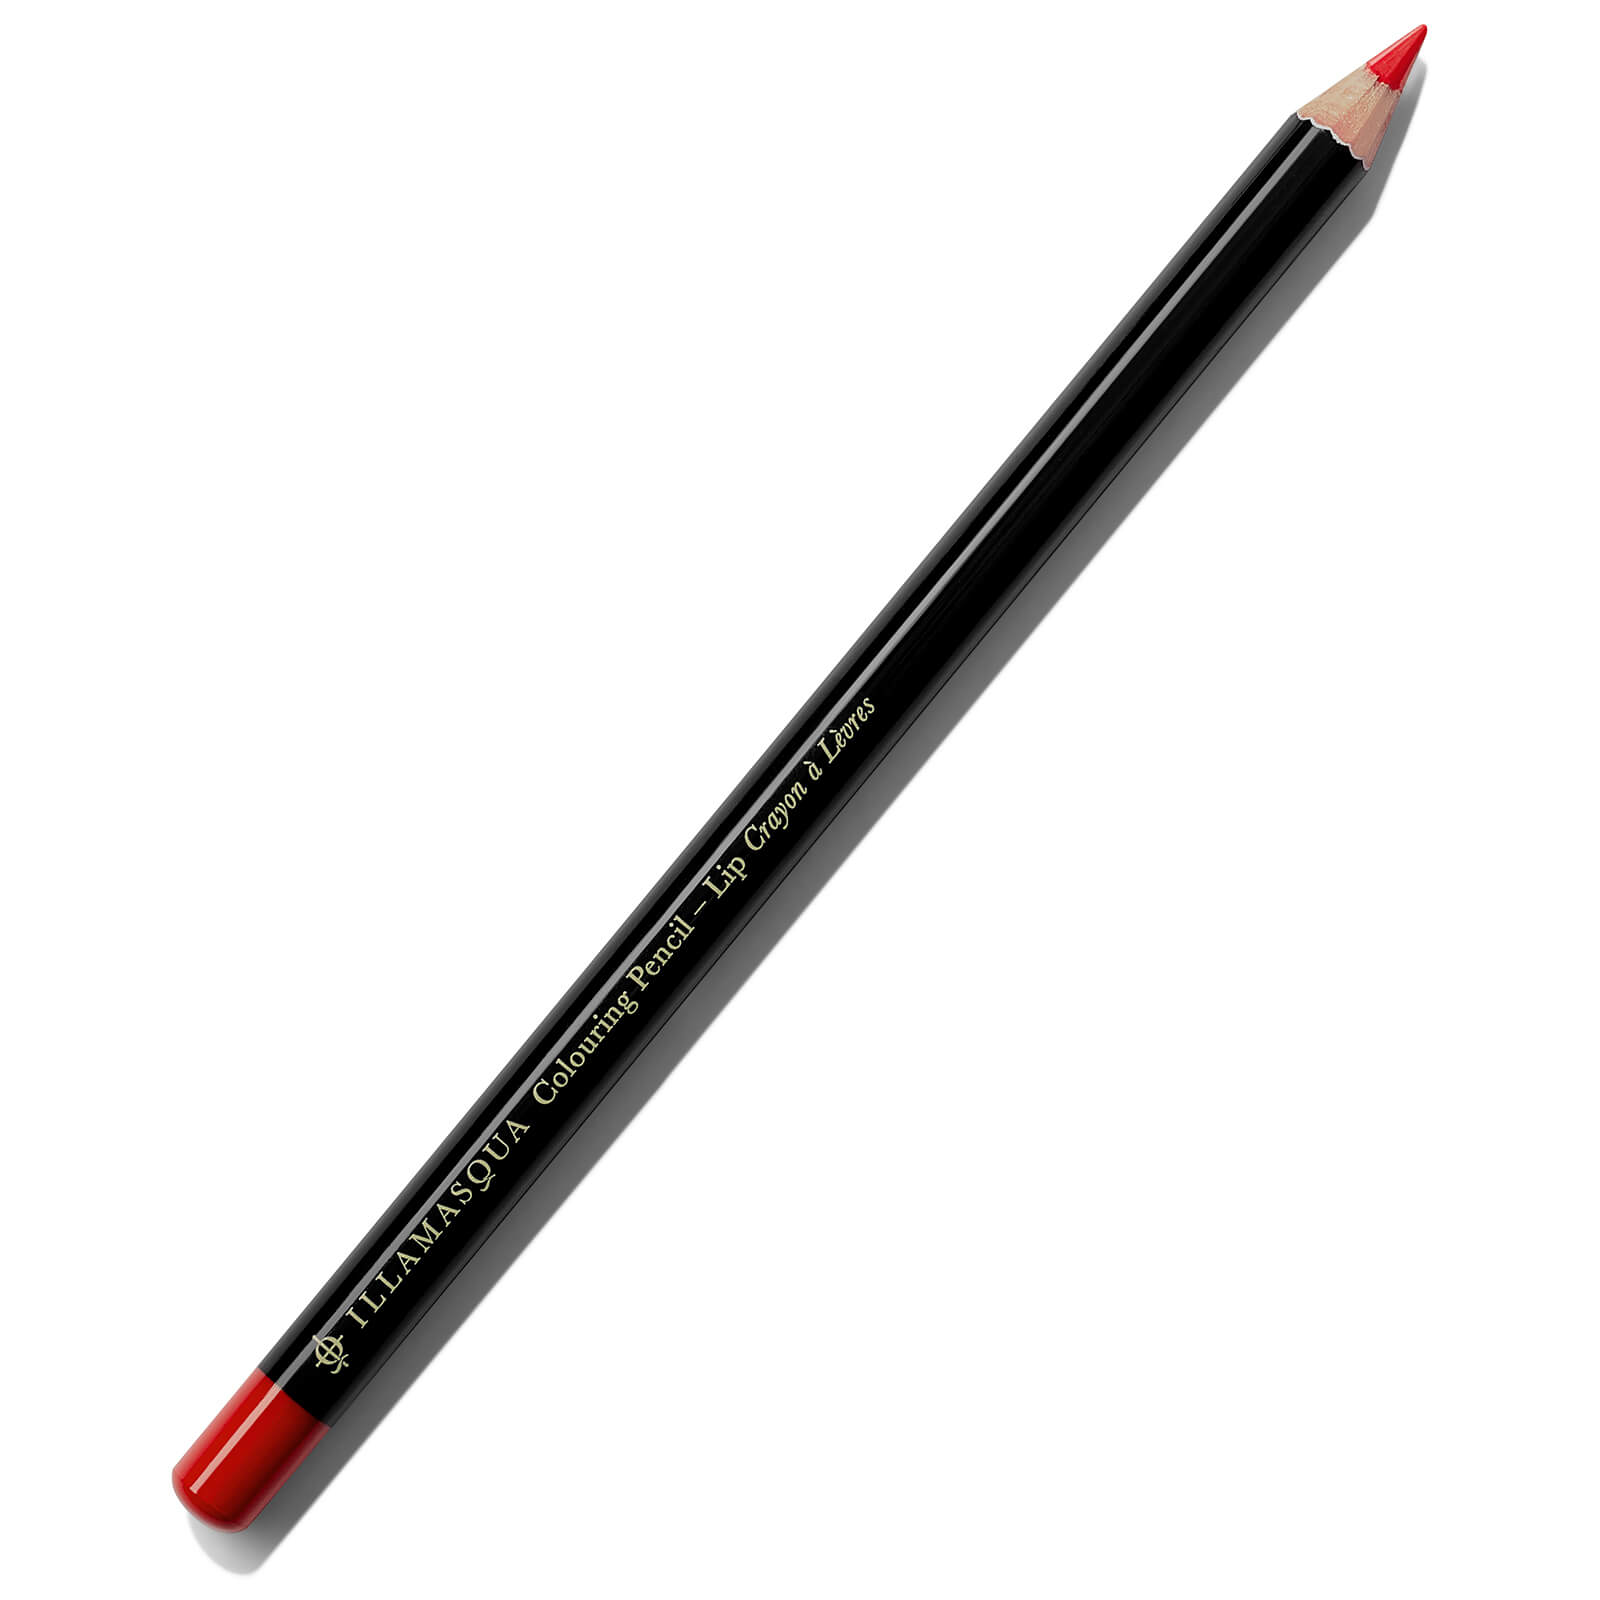 Illamasqua Colouring Lip Pencil 1.4g (Various Shades) - Feisty